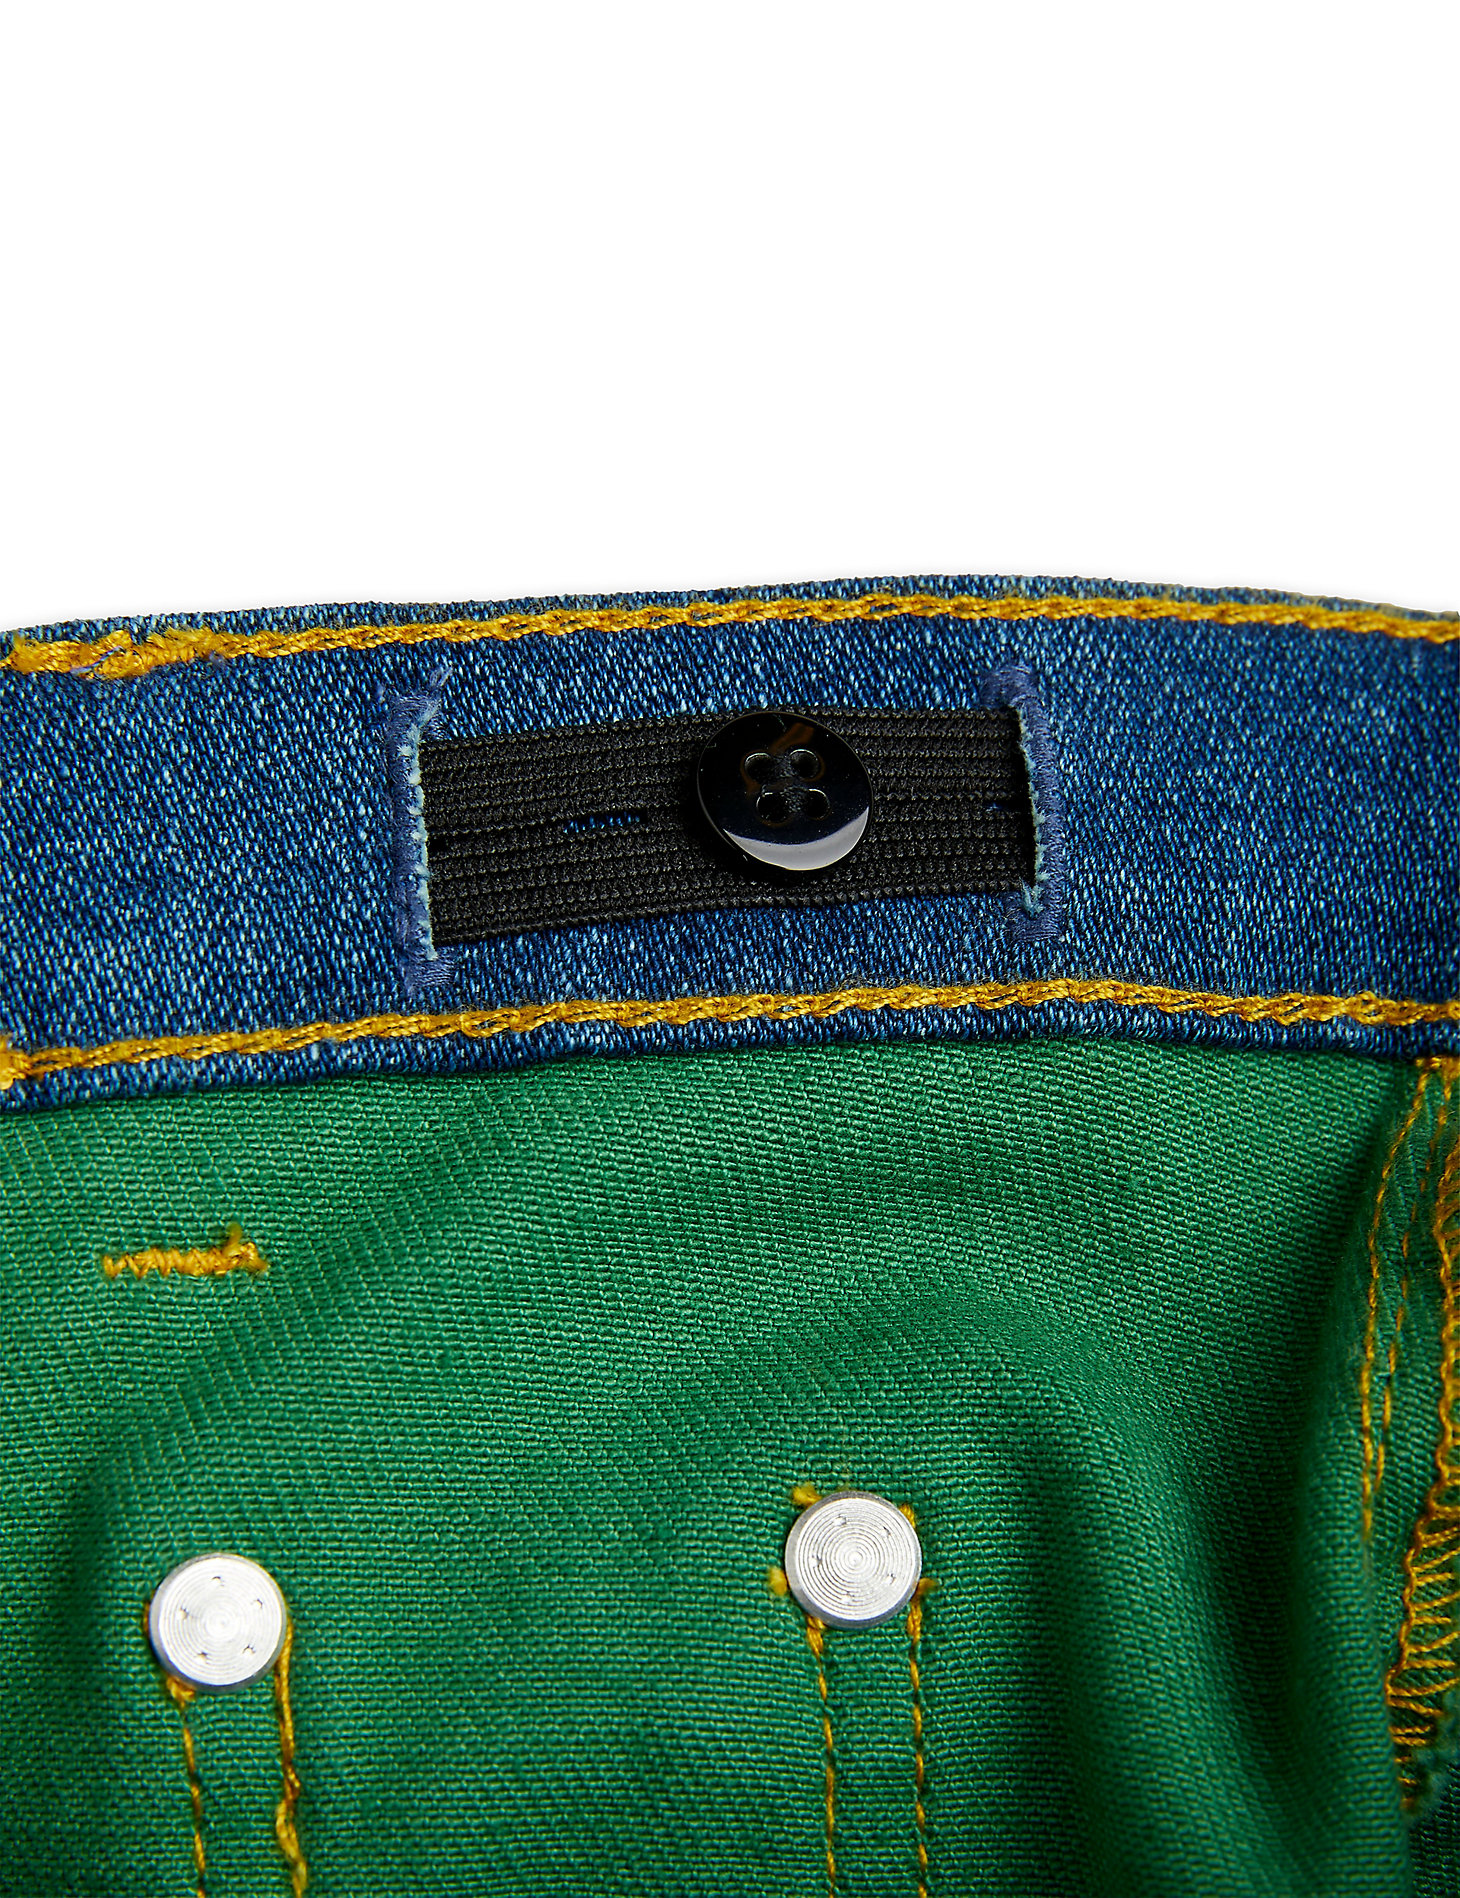 Mini Rodini x Wrangler Two-Tone Flared Jeans in Green alternative view 4